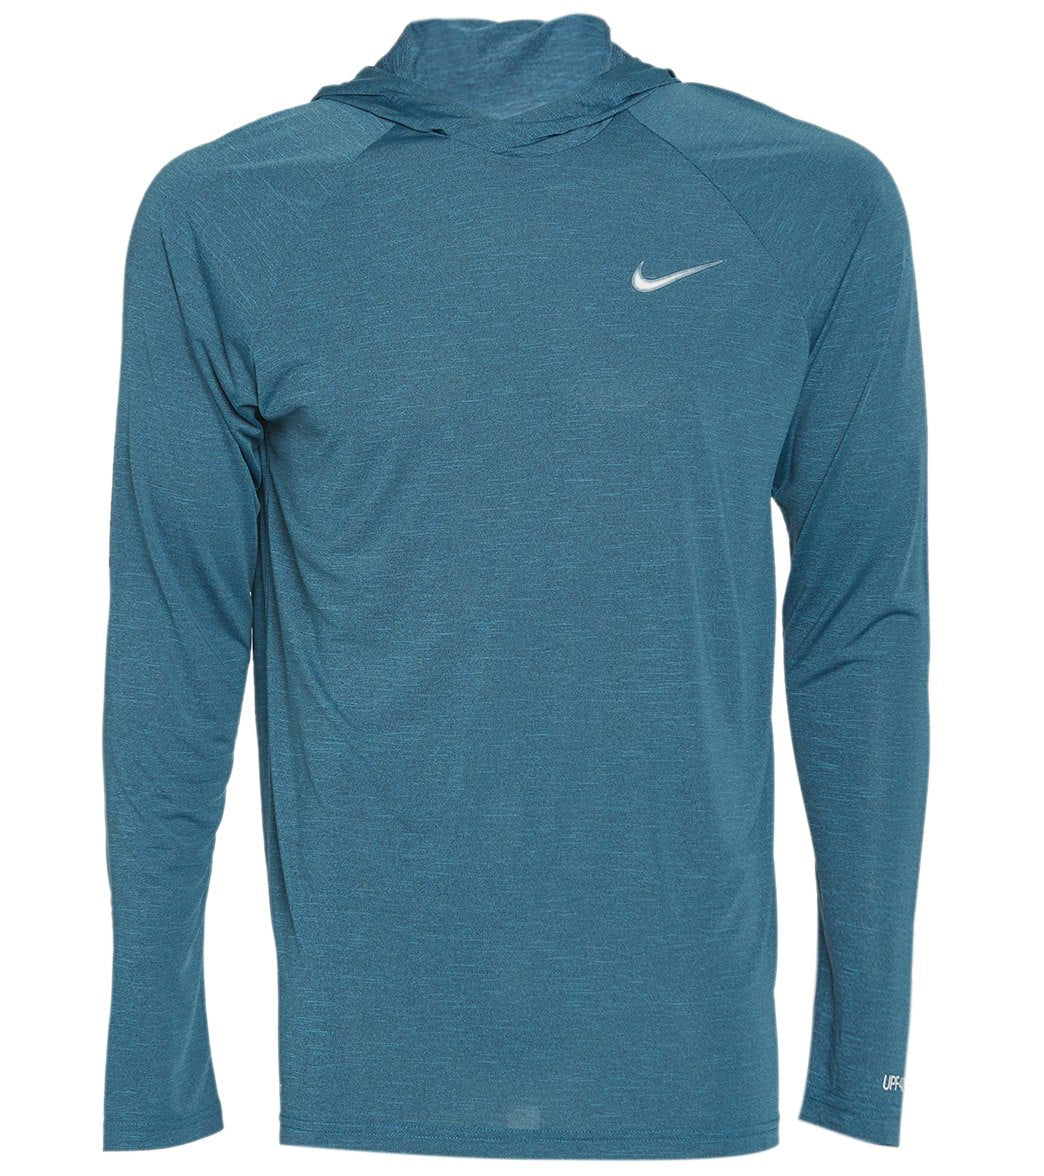 Nike Men's Heather Long Sleeve Hooded Hydro Rashguard Shirt - Laser Blue Xxl Polyester - Swimoutlet.com